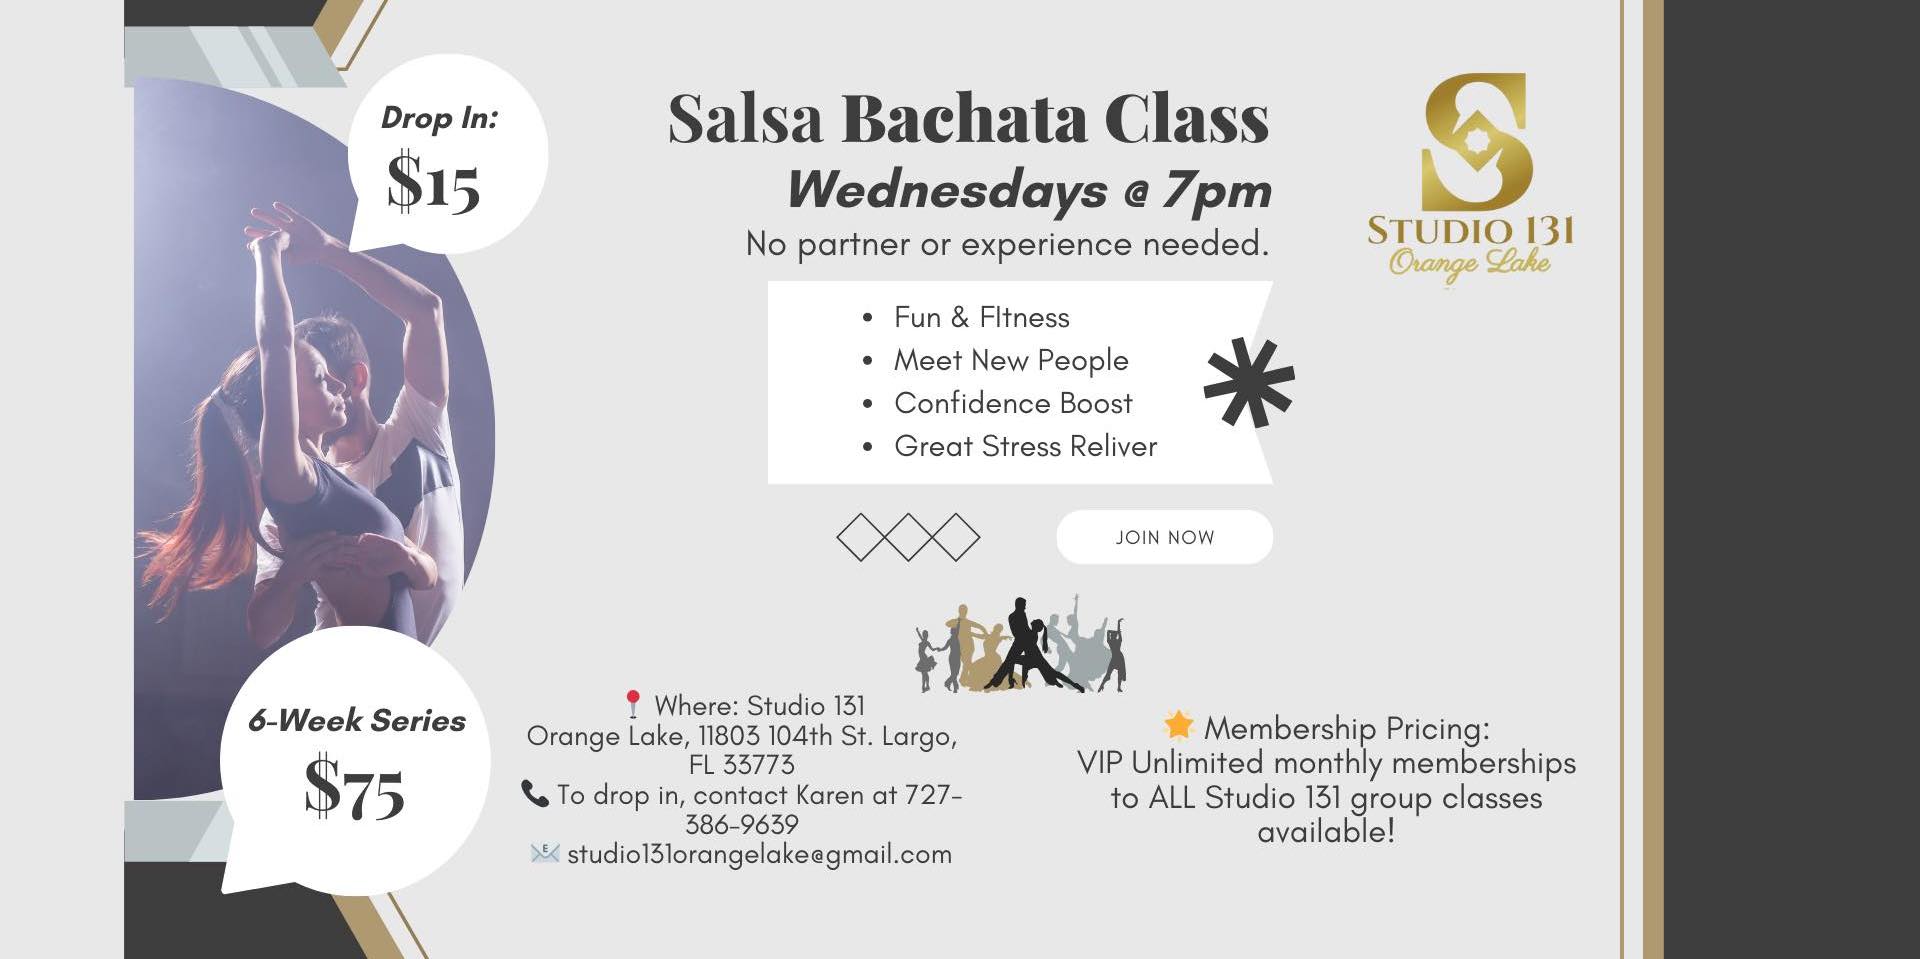  Wednesday Salsa/Bachata Class Series promotional image